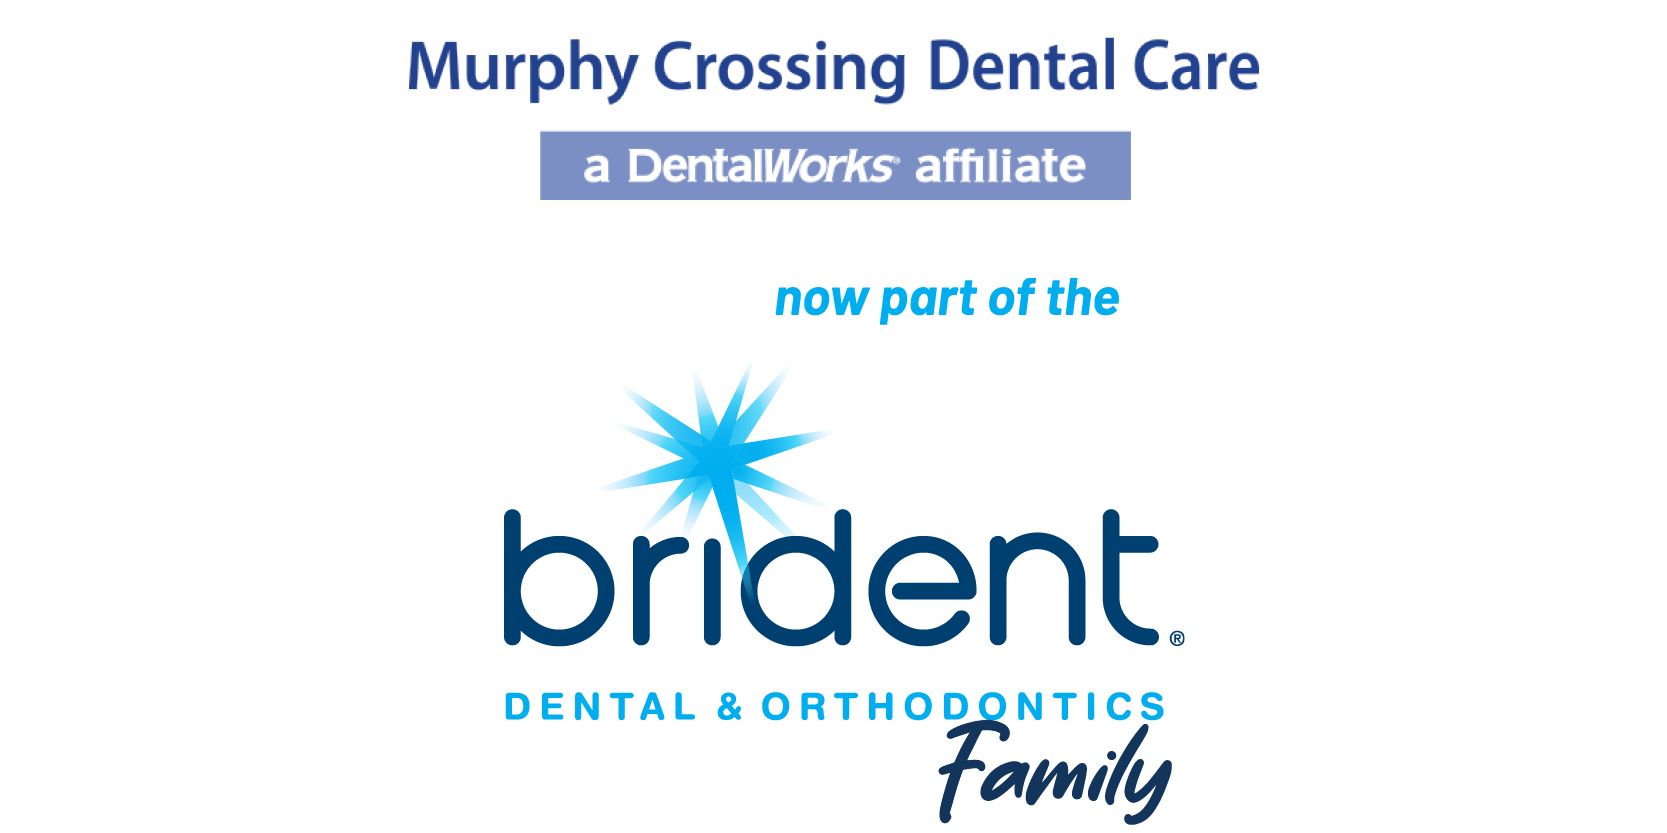 Murphy Crossing Dental Care